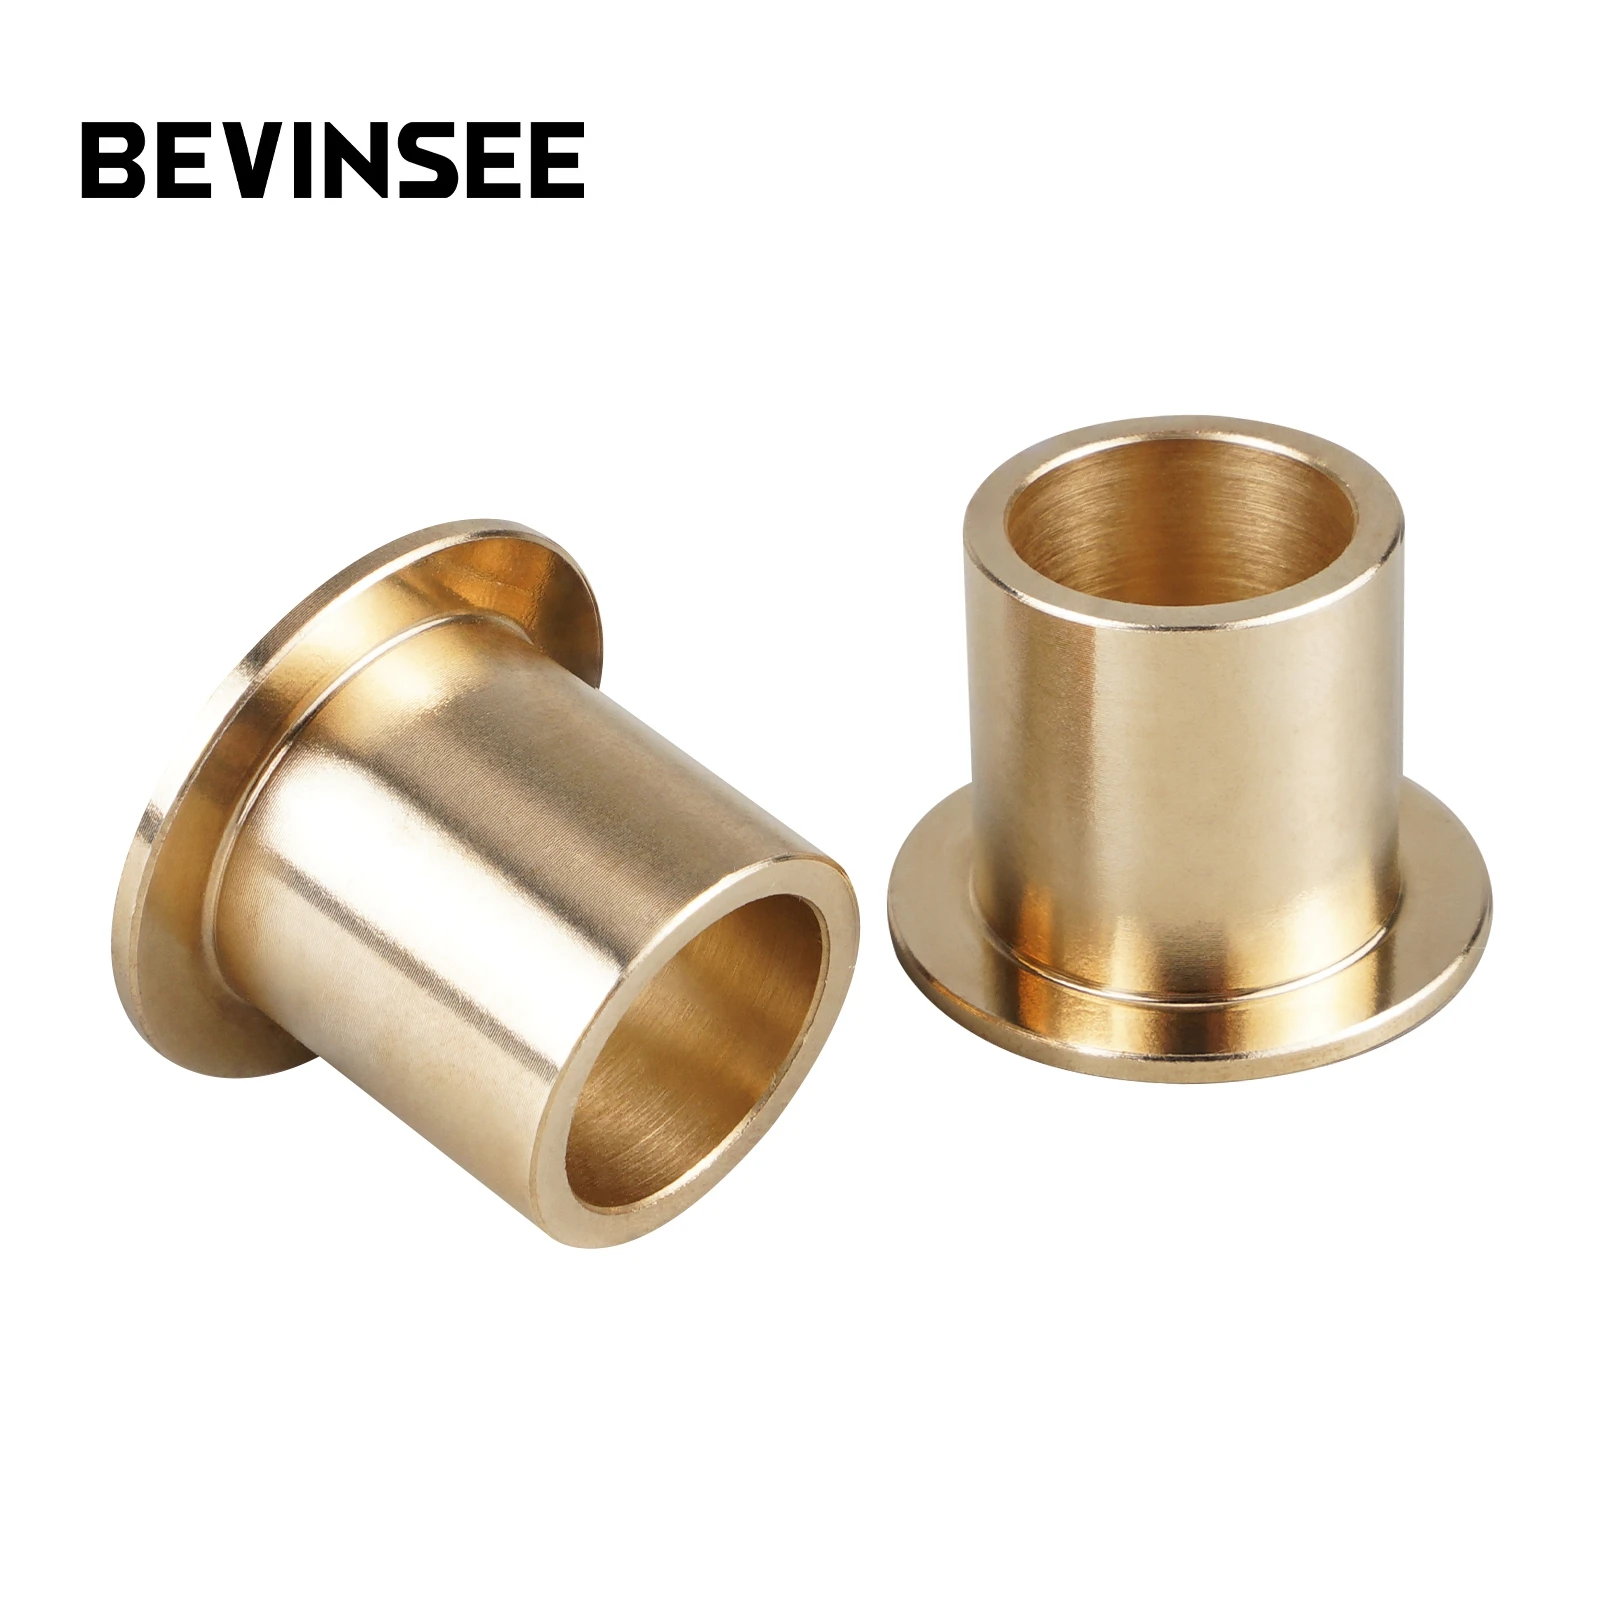 Bevinsee brass brake clutch pedal bushings for bmw e90 e36 e39 e87 e91 f30 f22 x1 thumb200